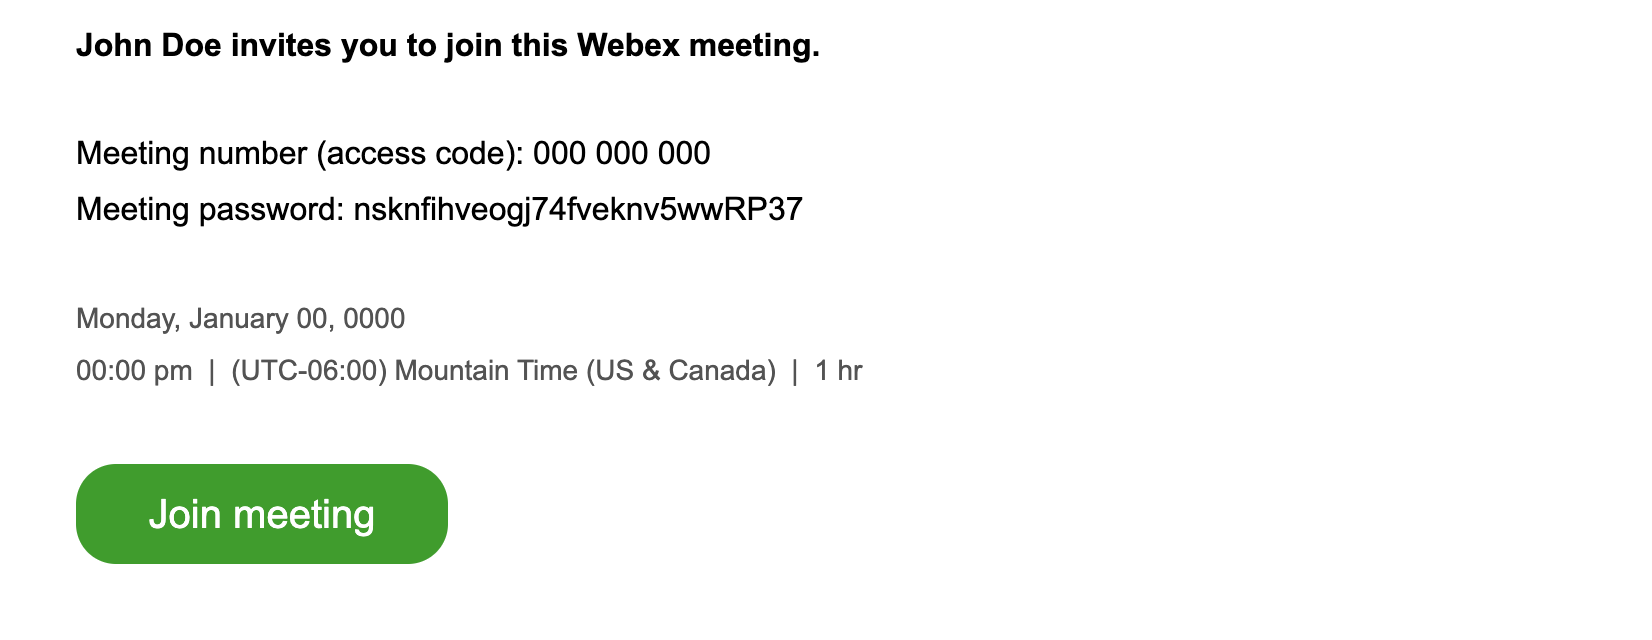 Webex appt email